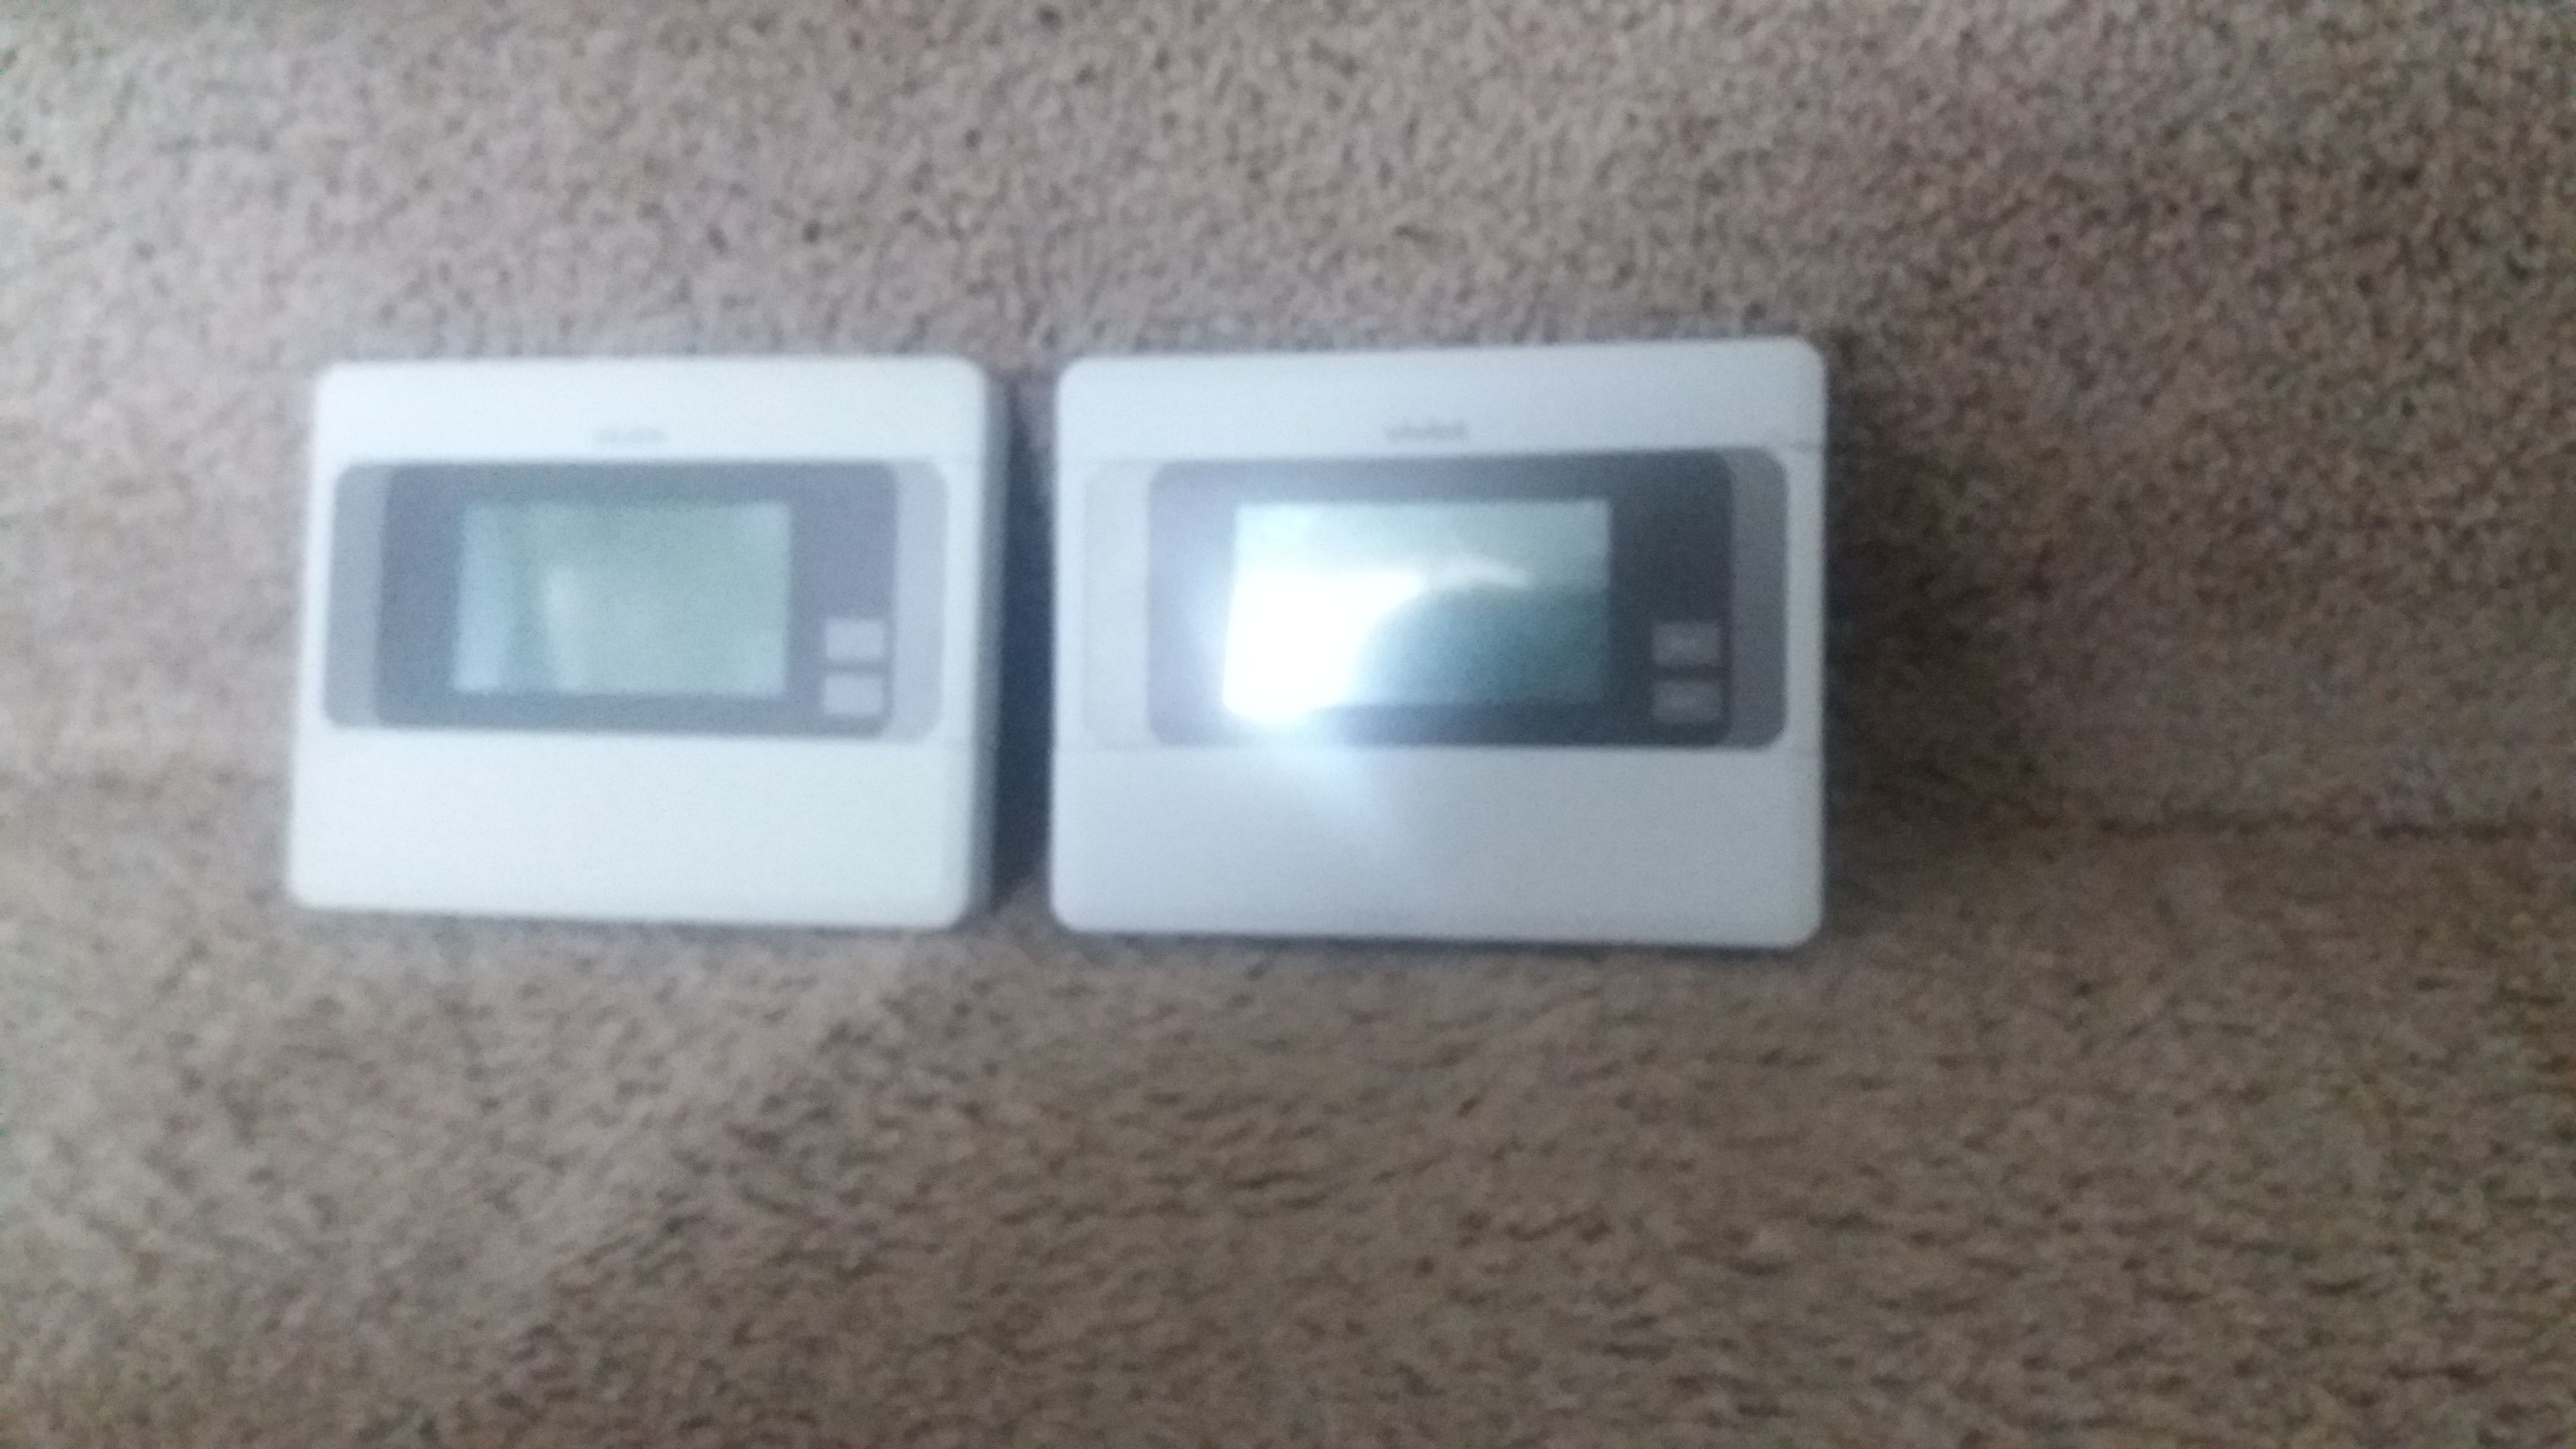 Radio Thermostat (2) Vivint